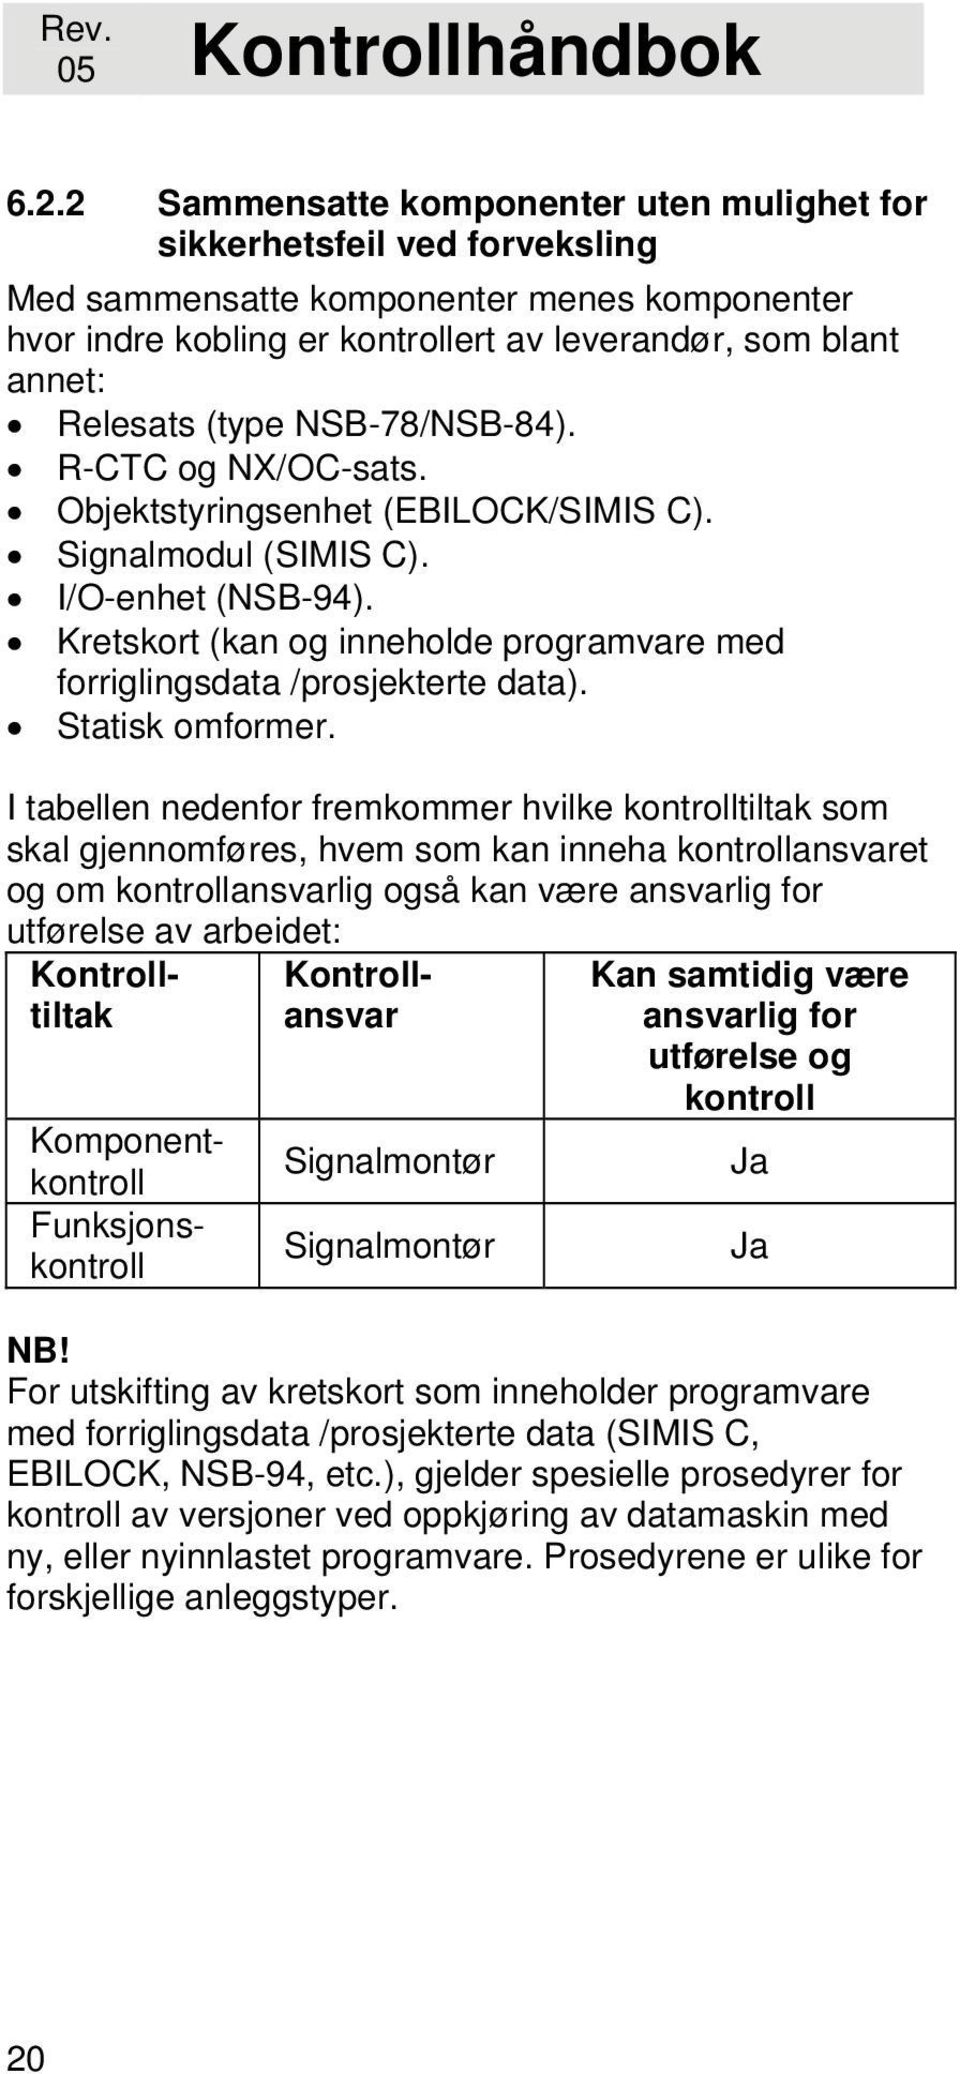 (type NSB-78/NSB-84). R-CTC og NX/OC-sats. Objektstyringsenhet (EBILOCK/SIMIS C). Signalmodul (SIMIS C). I/O-enhet (NSB-94).